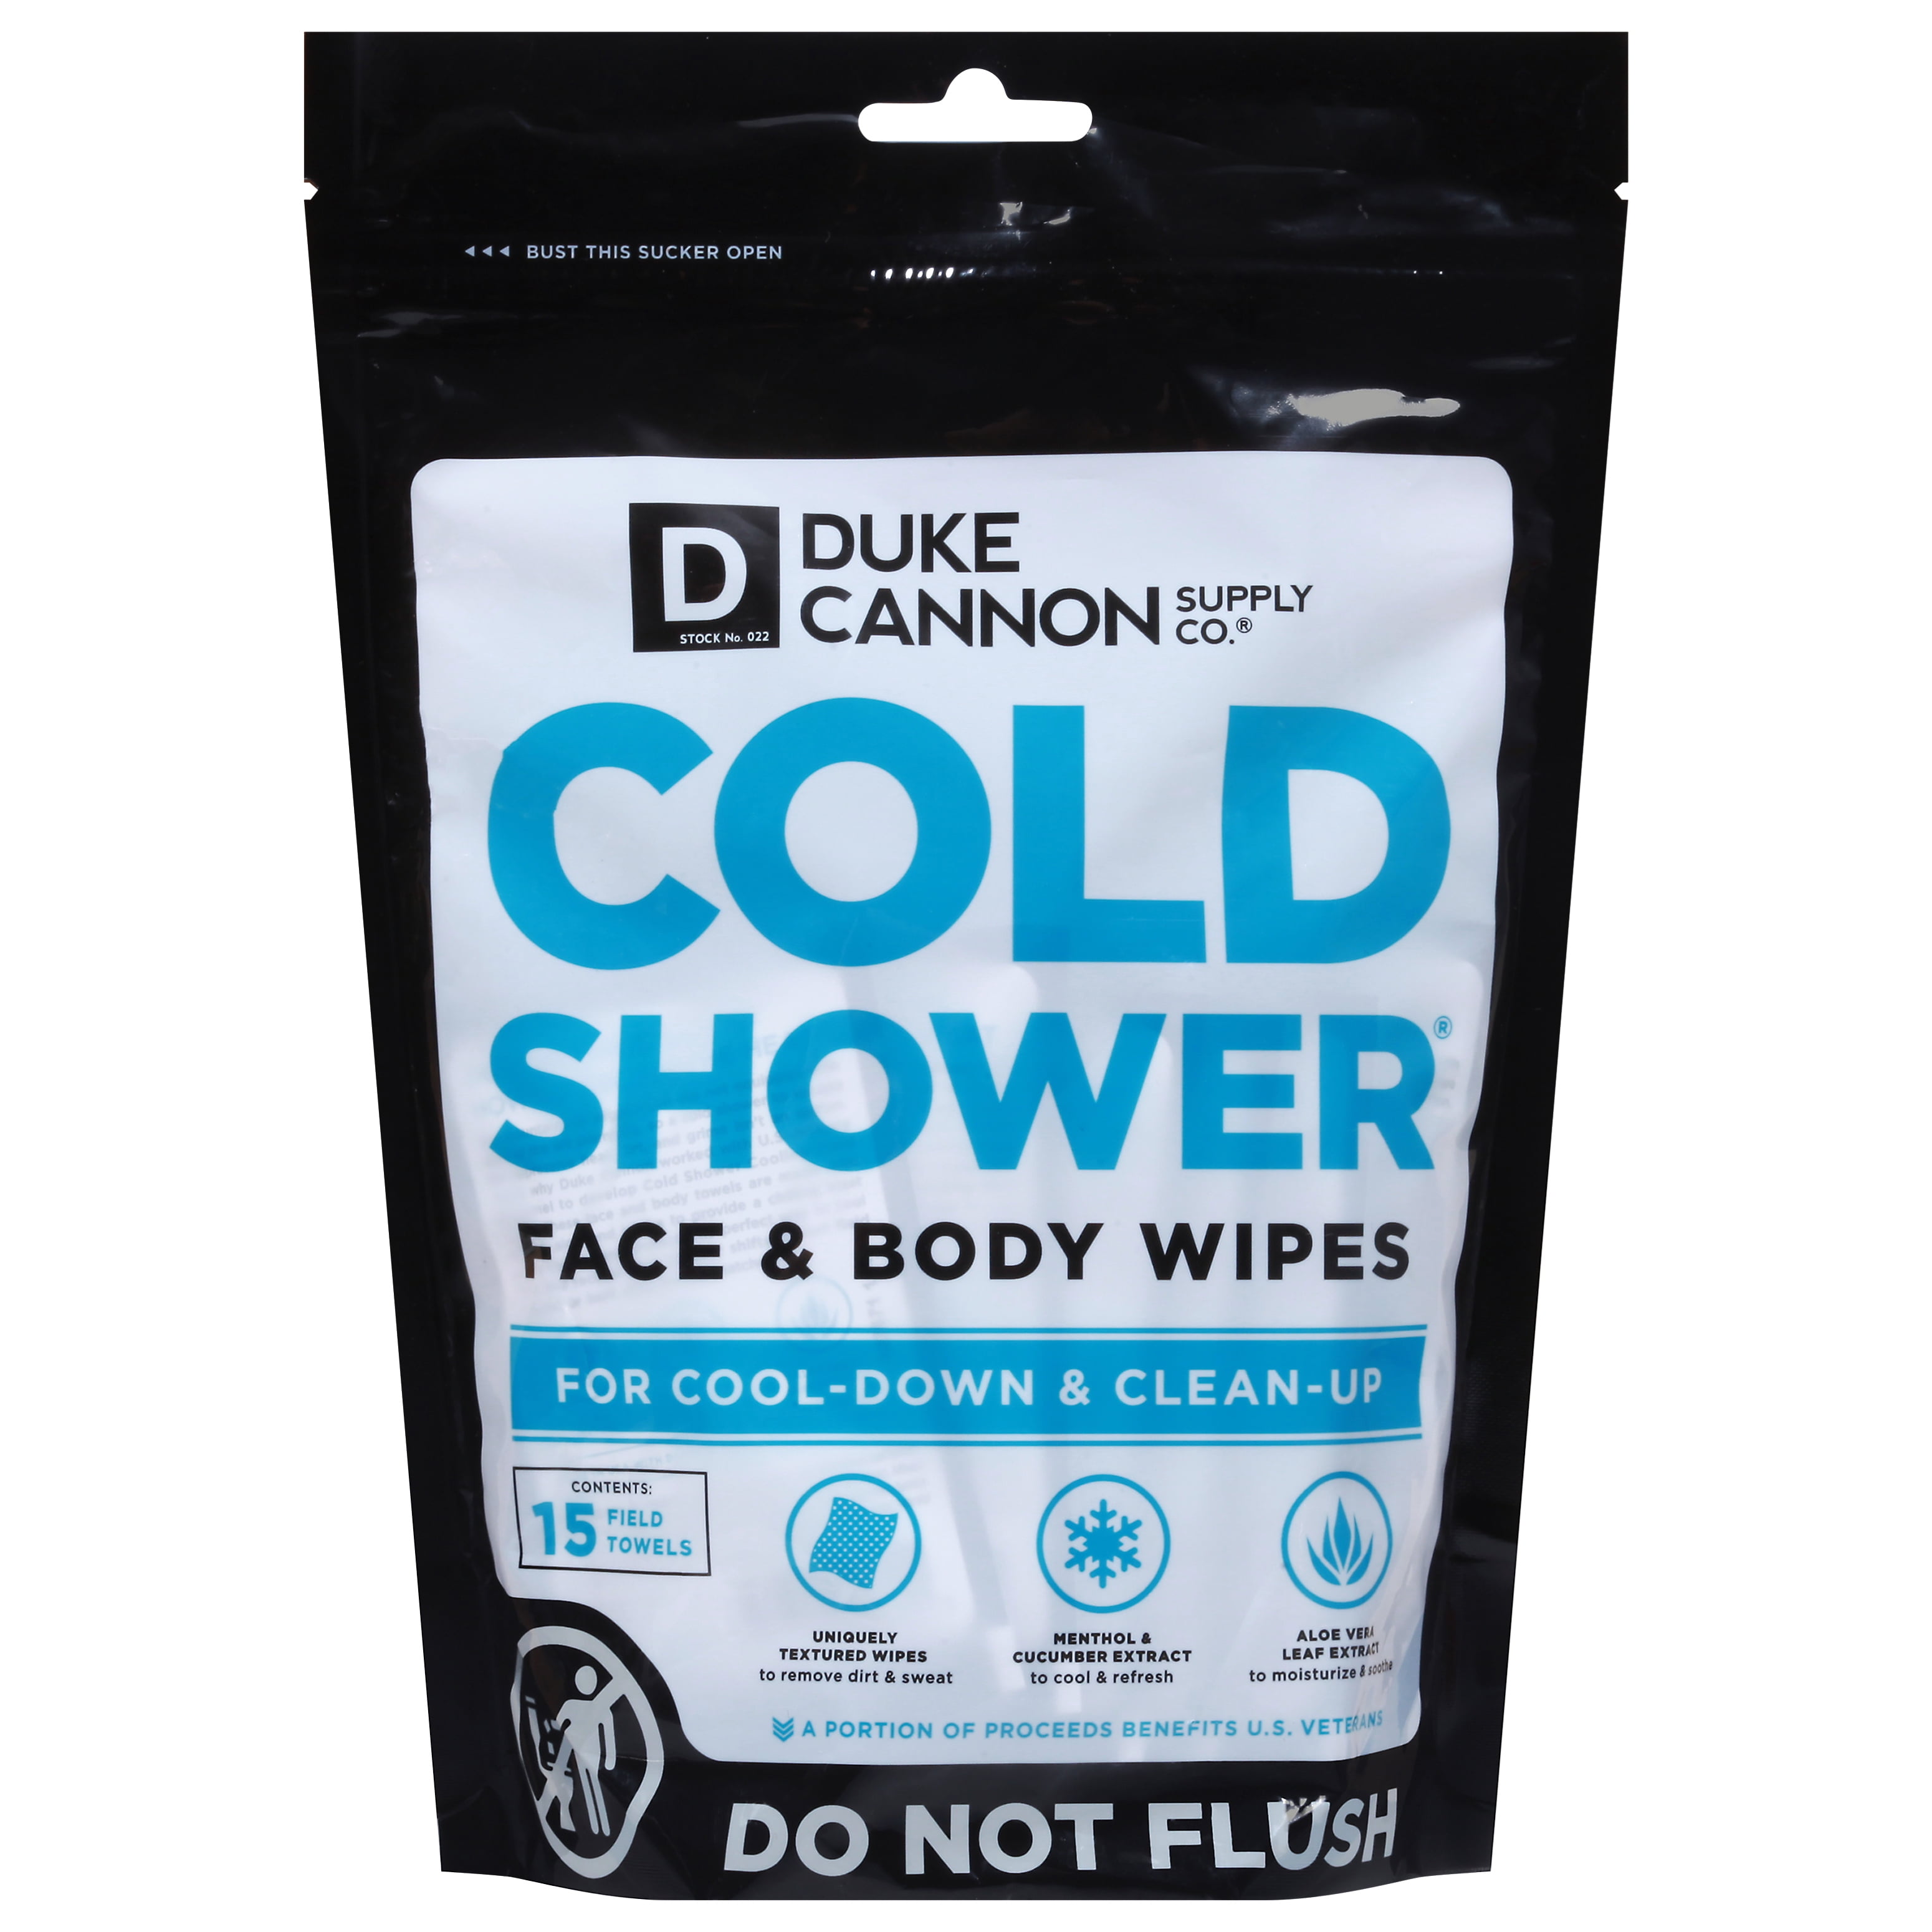 Cold Shower Cooling Soap 2pk